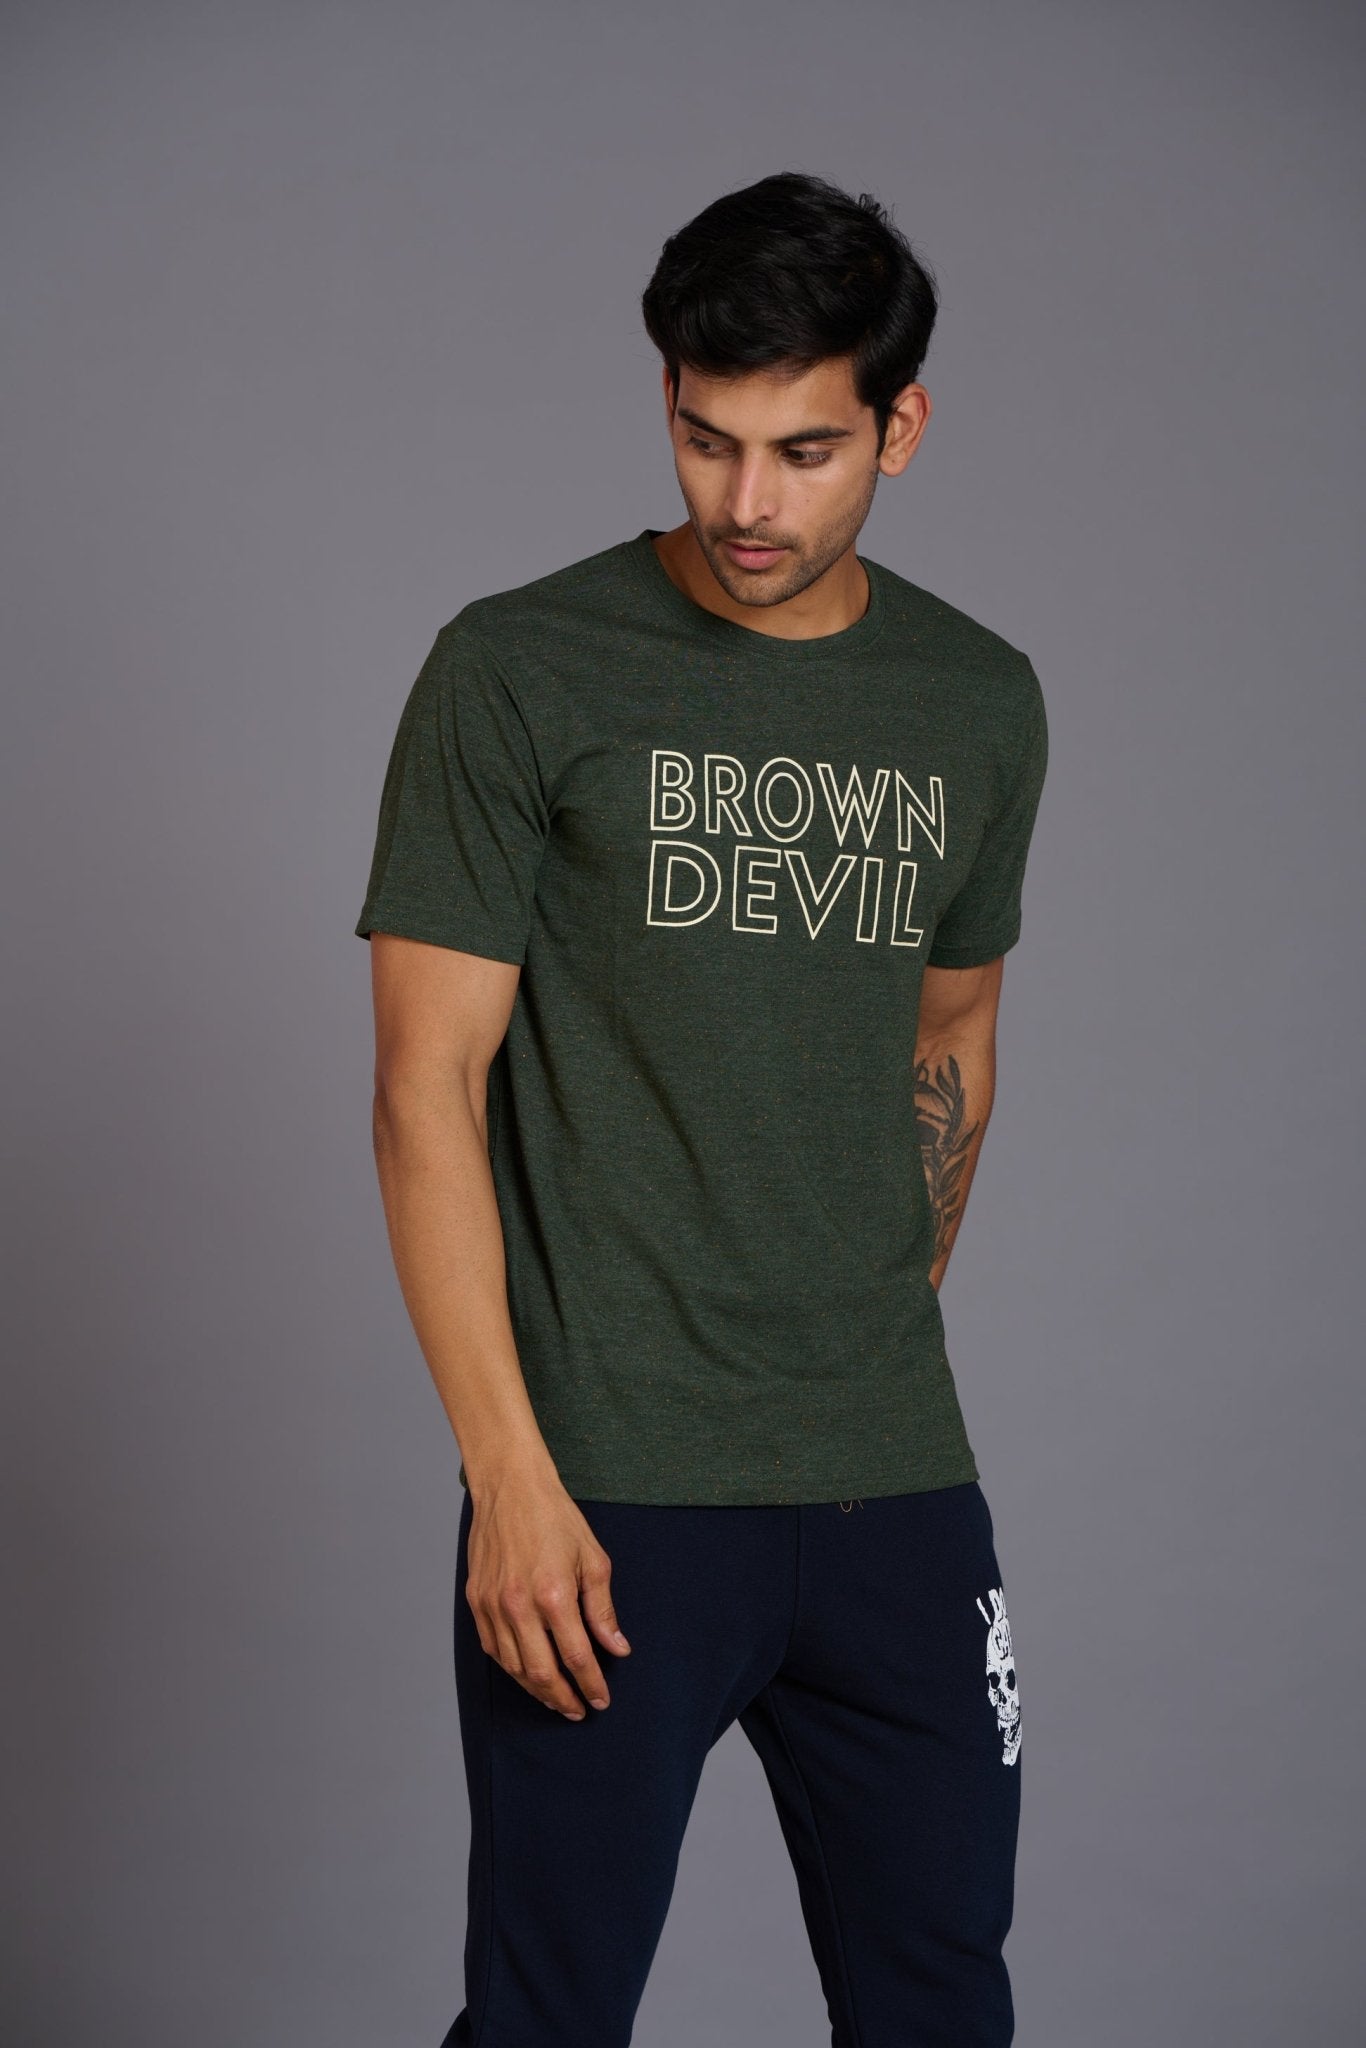 Brown Devil Printed Green T-Shirt for Men - Go Devil